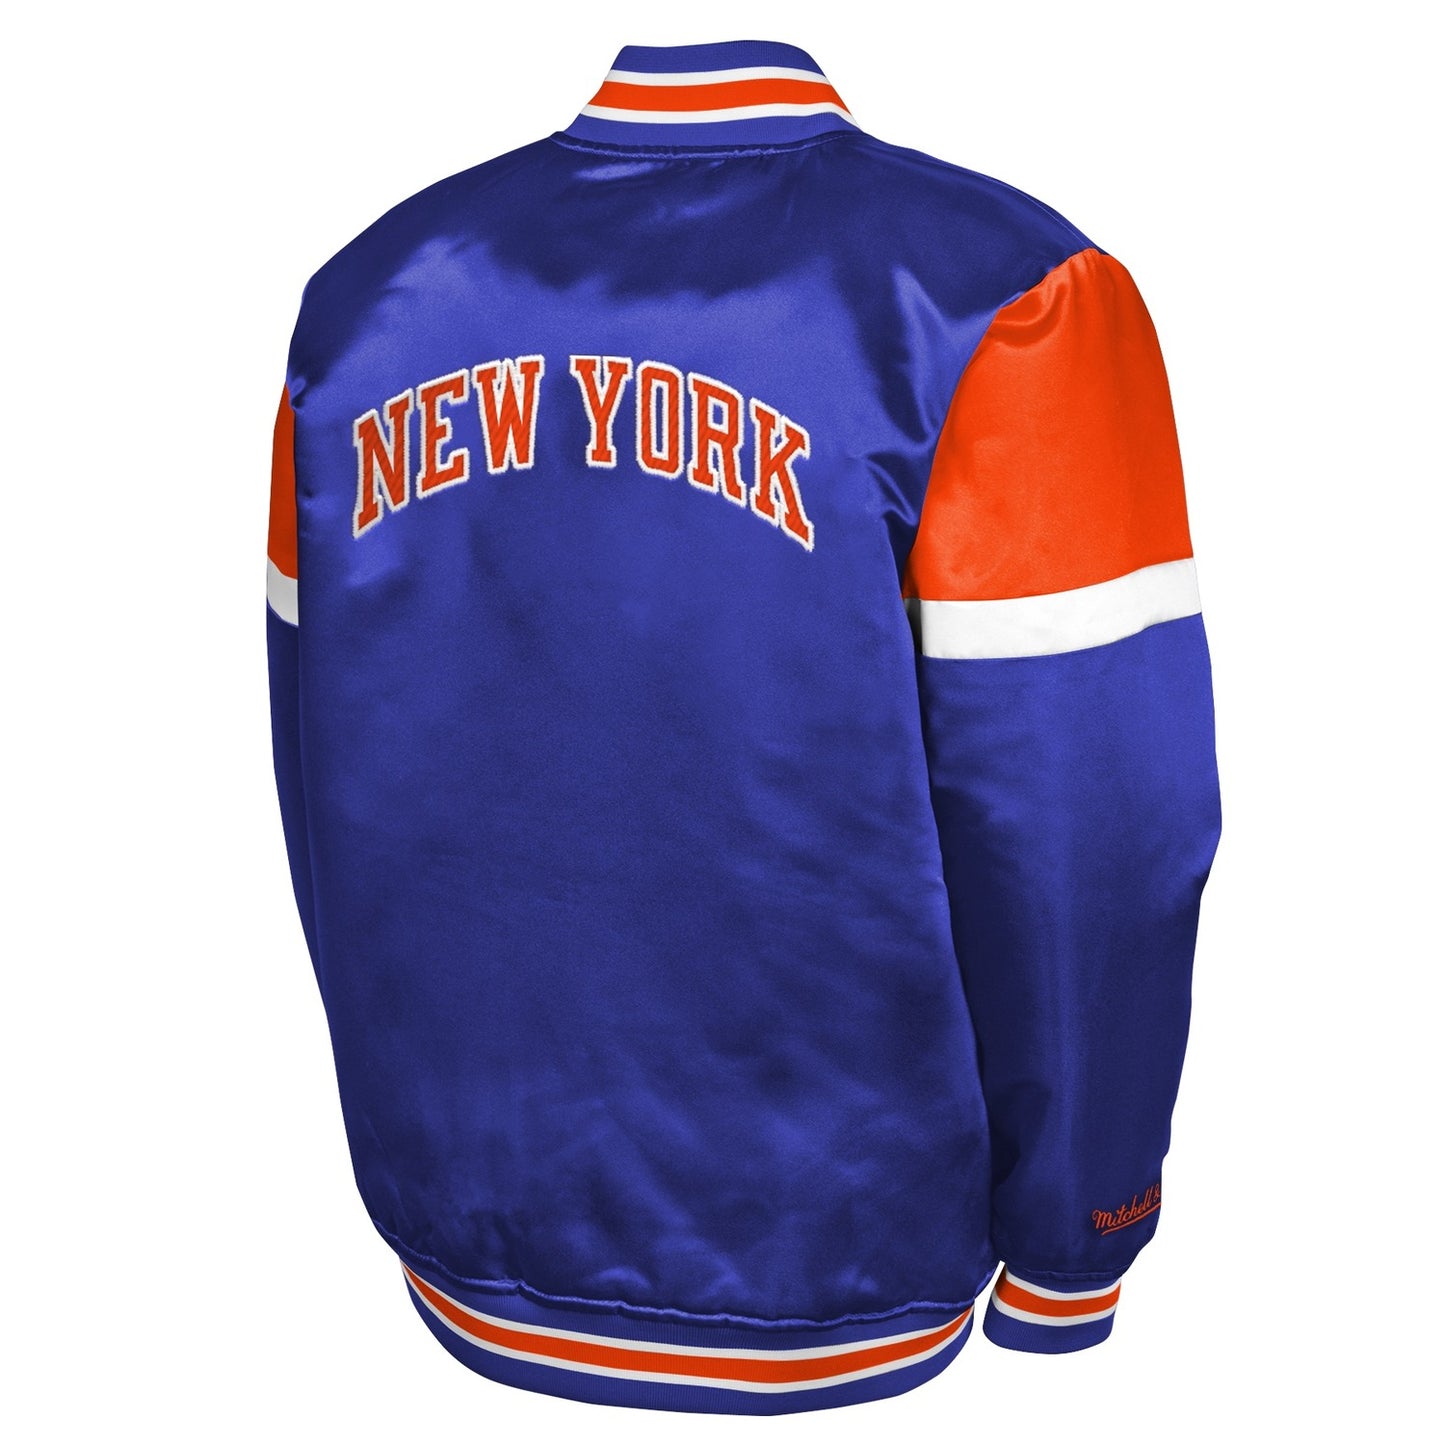 New York Knicks Youth Heavy Weight Satin Jacket - Back View